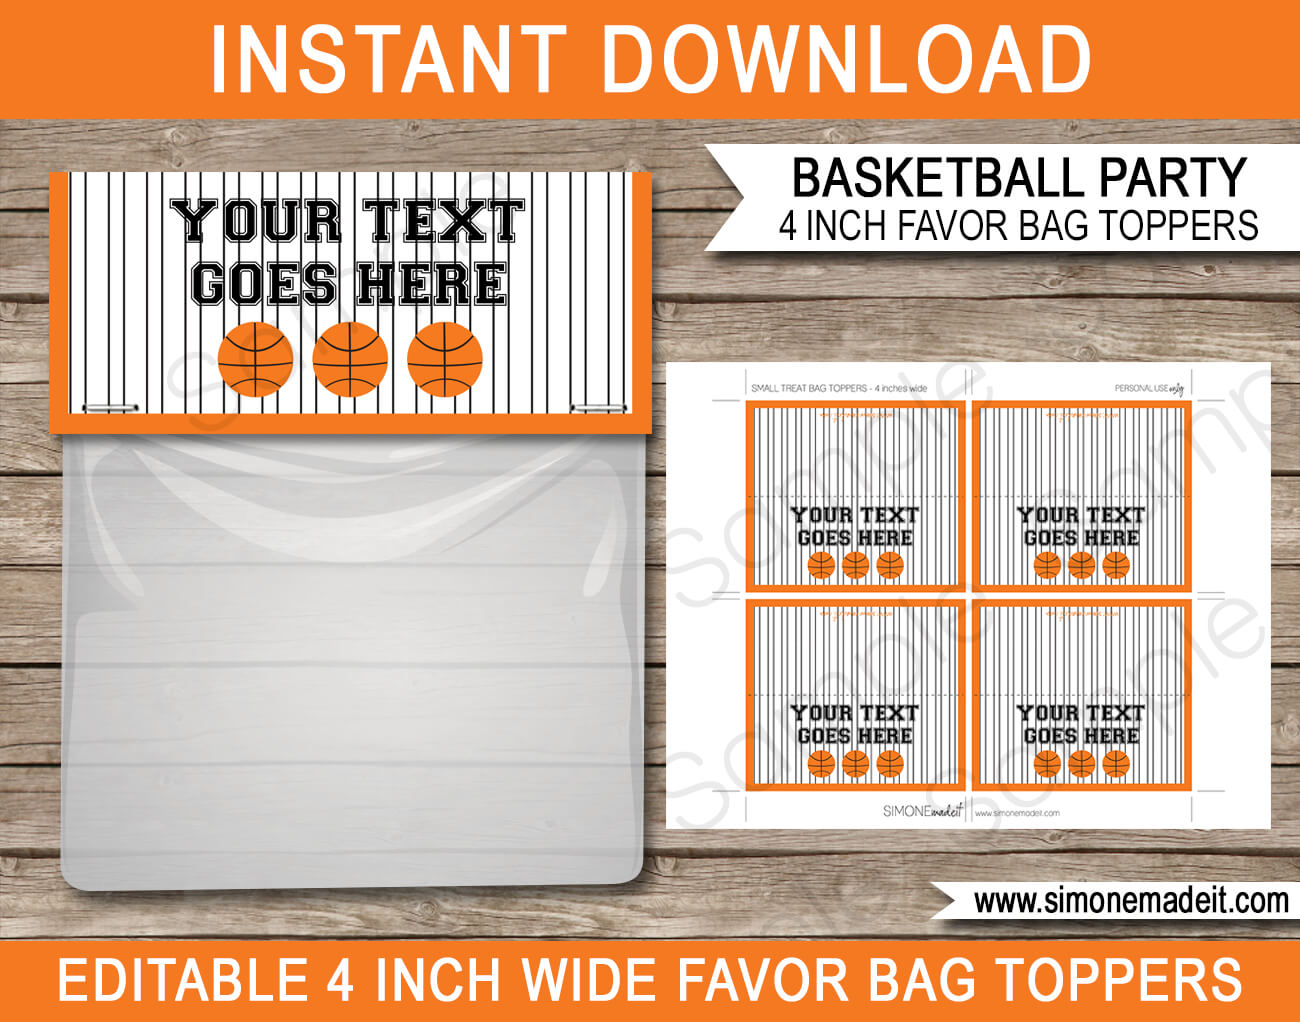 Printable Basketball Party Favor Bag Toppers | Editable DIY Template | $3.00 INSTANT DOWNLOAD via SIMONEmadeit.com